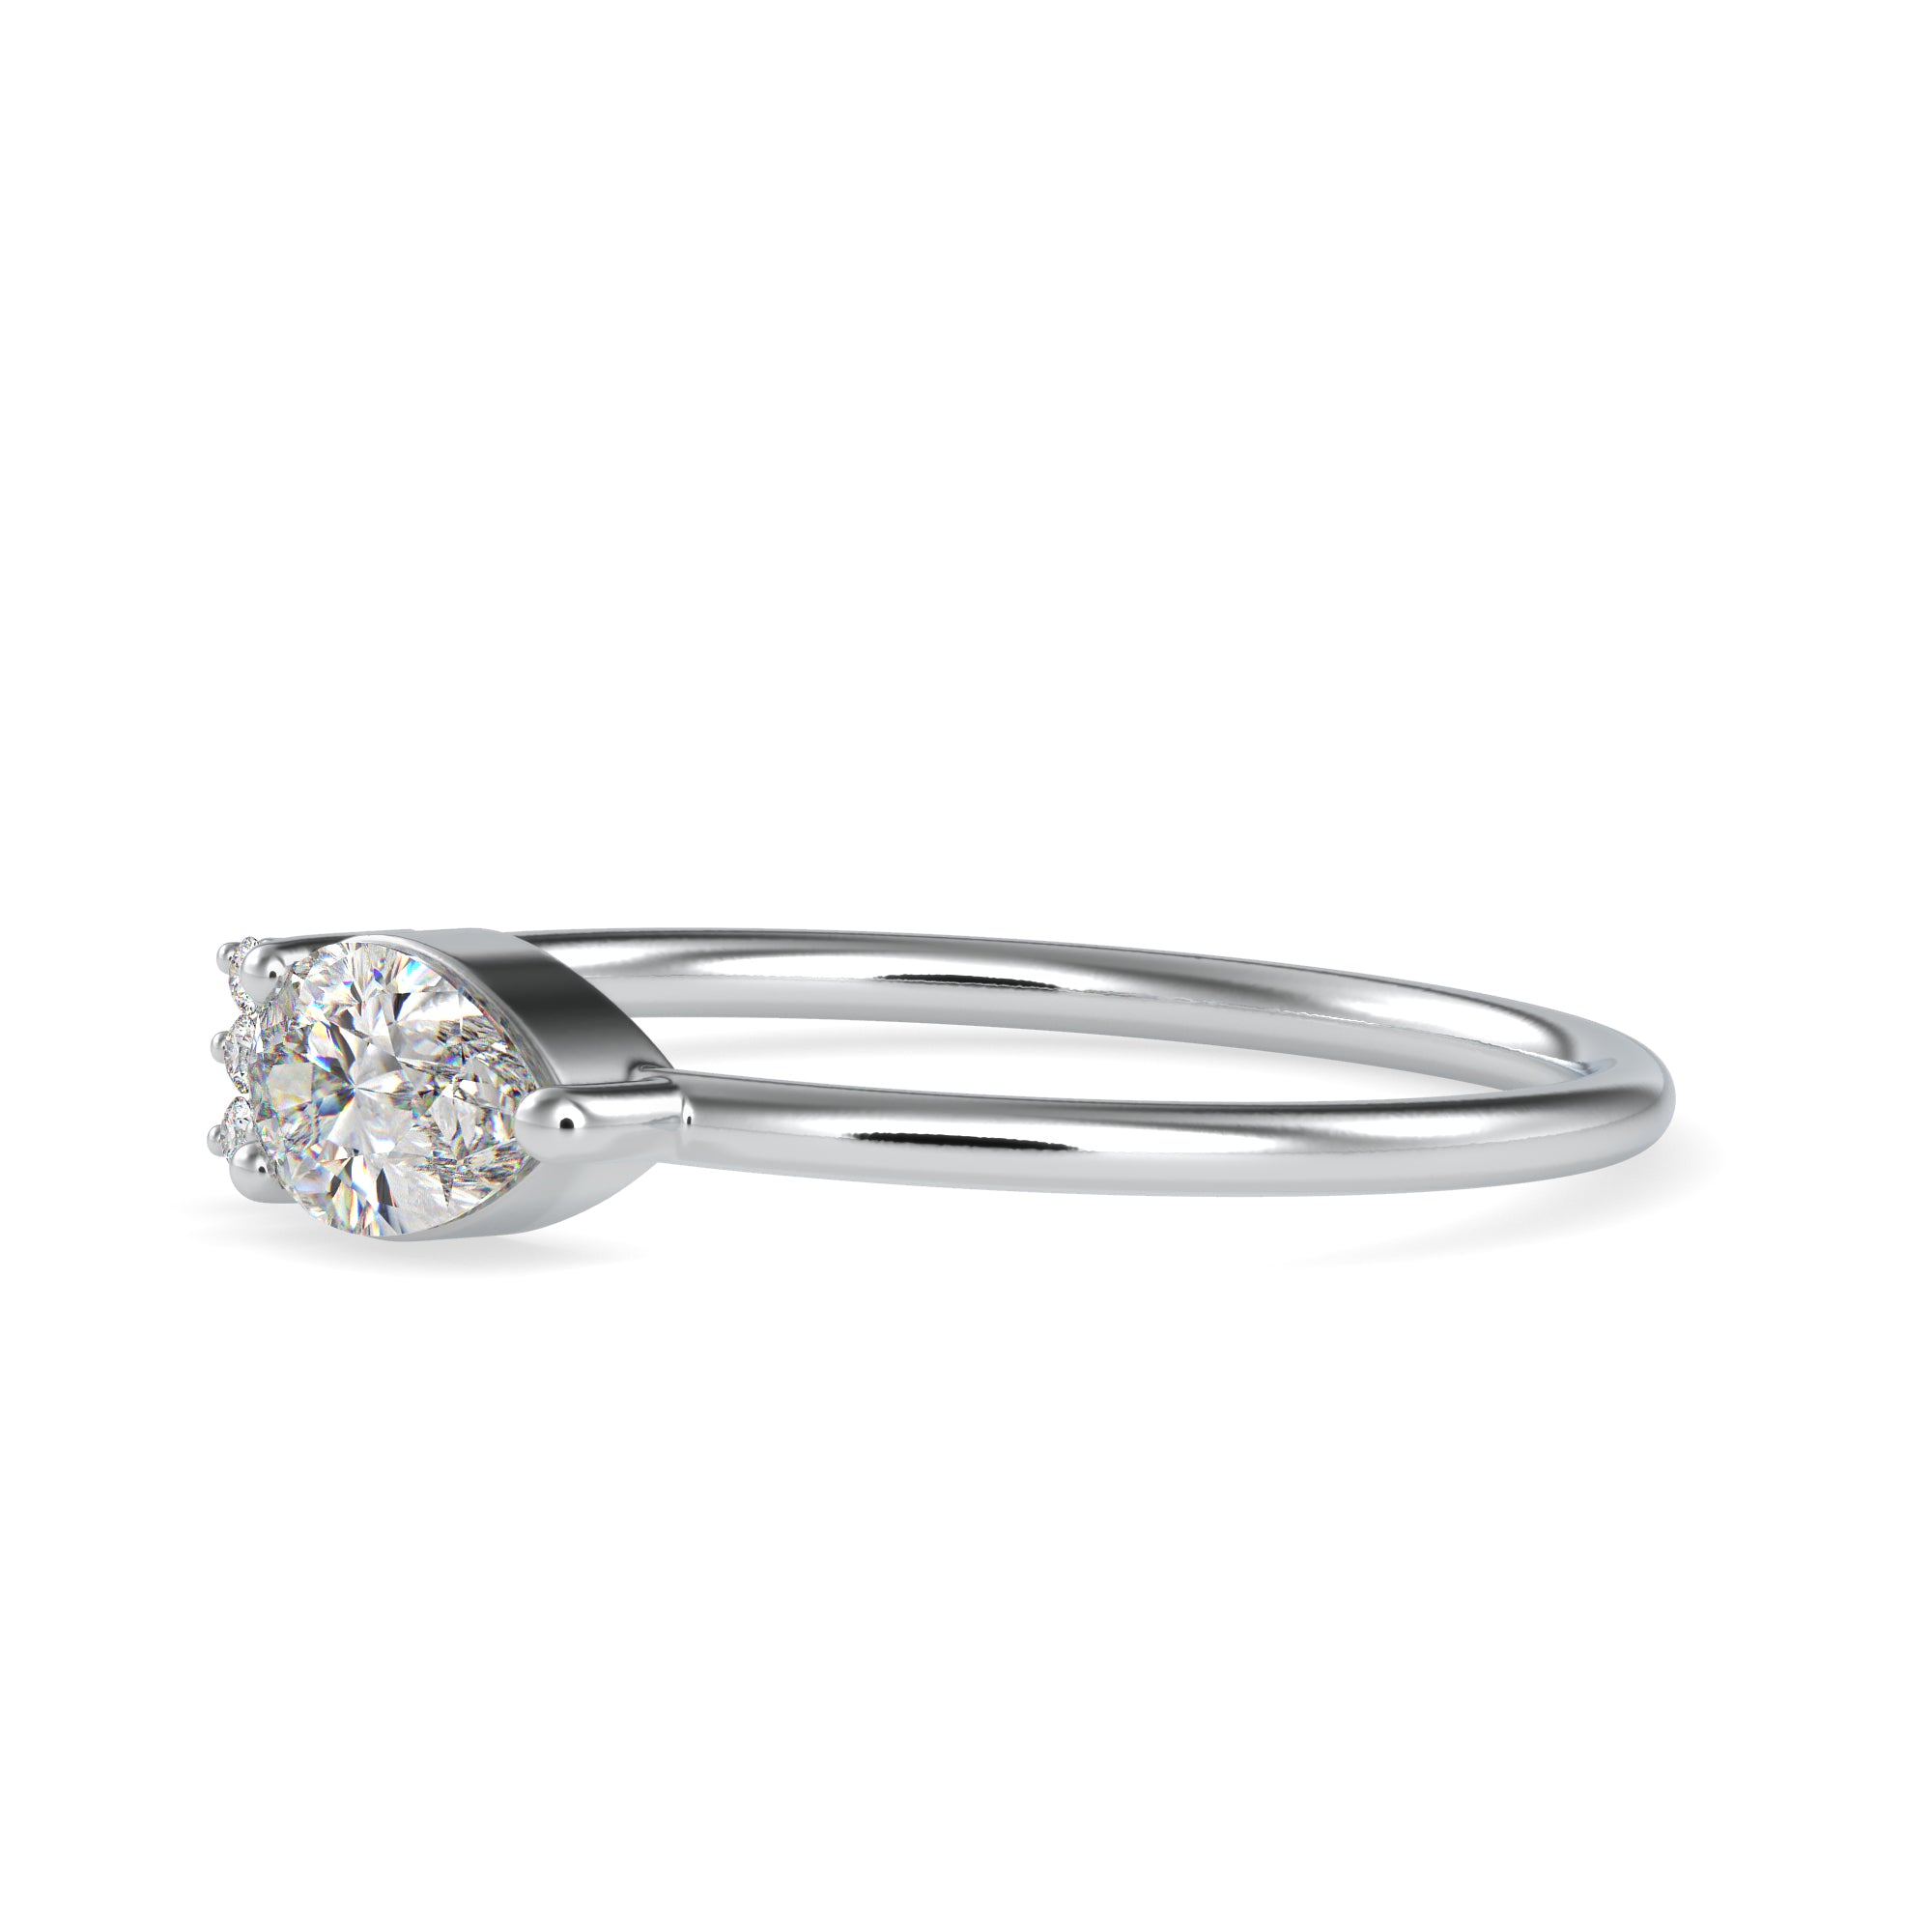 30-Pointer Pear cut Solitaire Platinum Ring with Round Brilliant Cut Diamond JL PT 0675